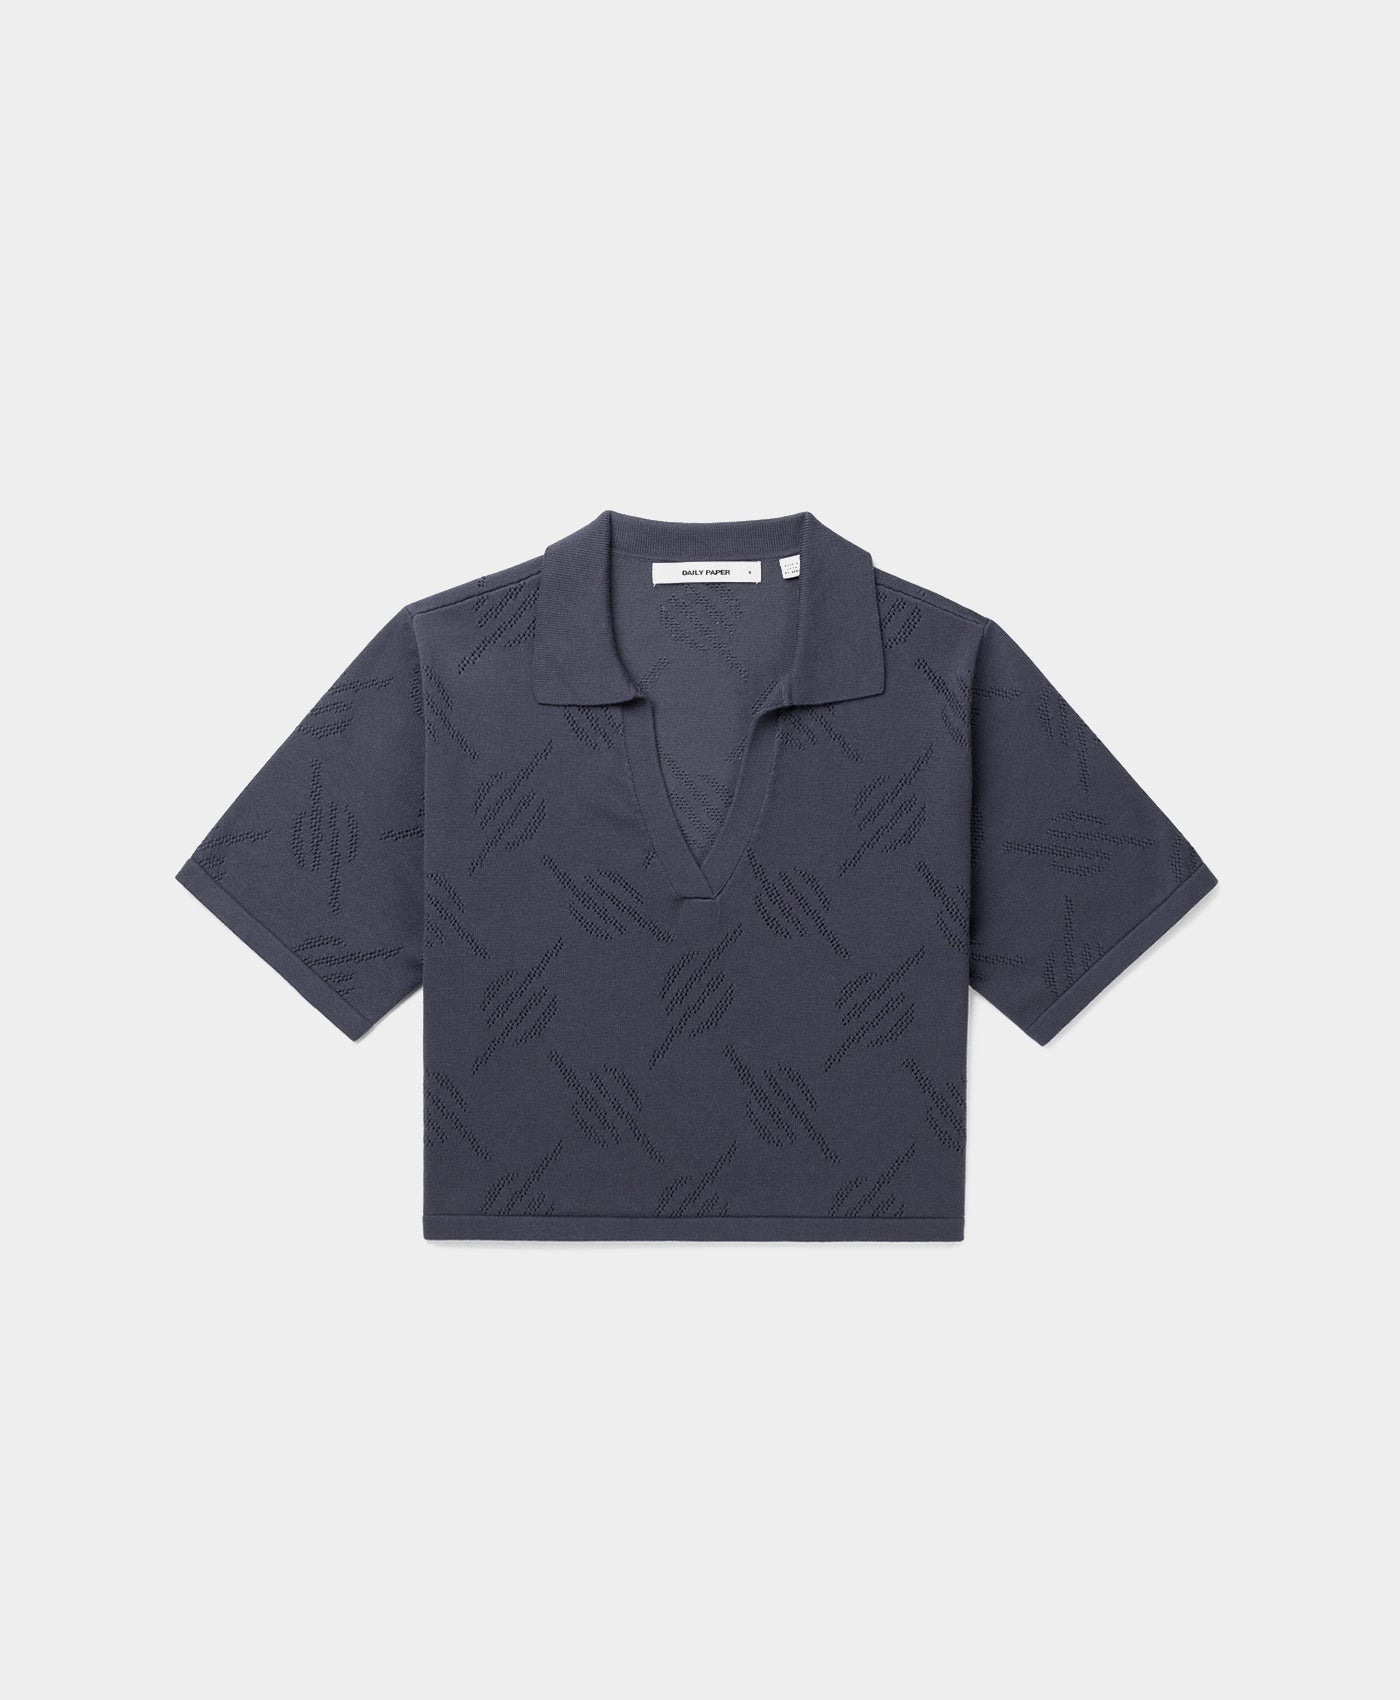 DP - Iron Grey Repatty Shirt - Packshot - Front